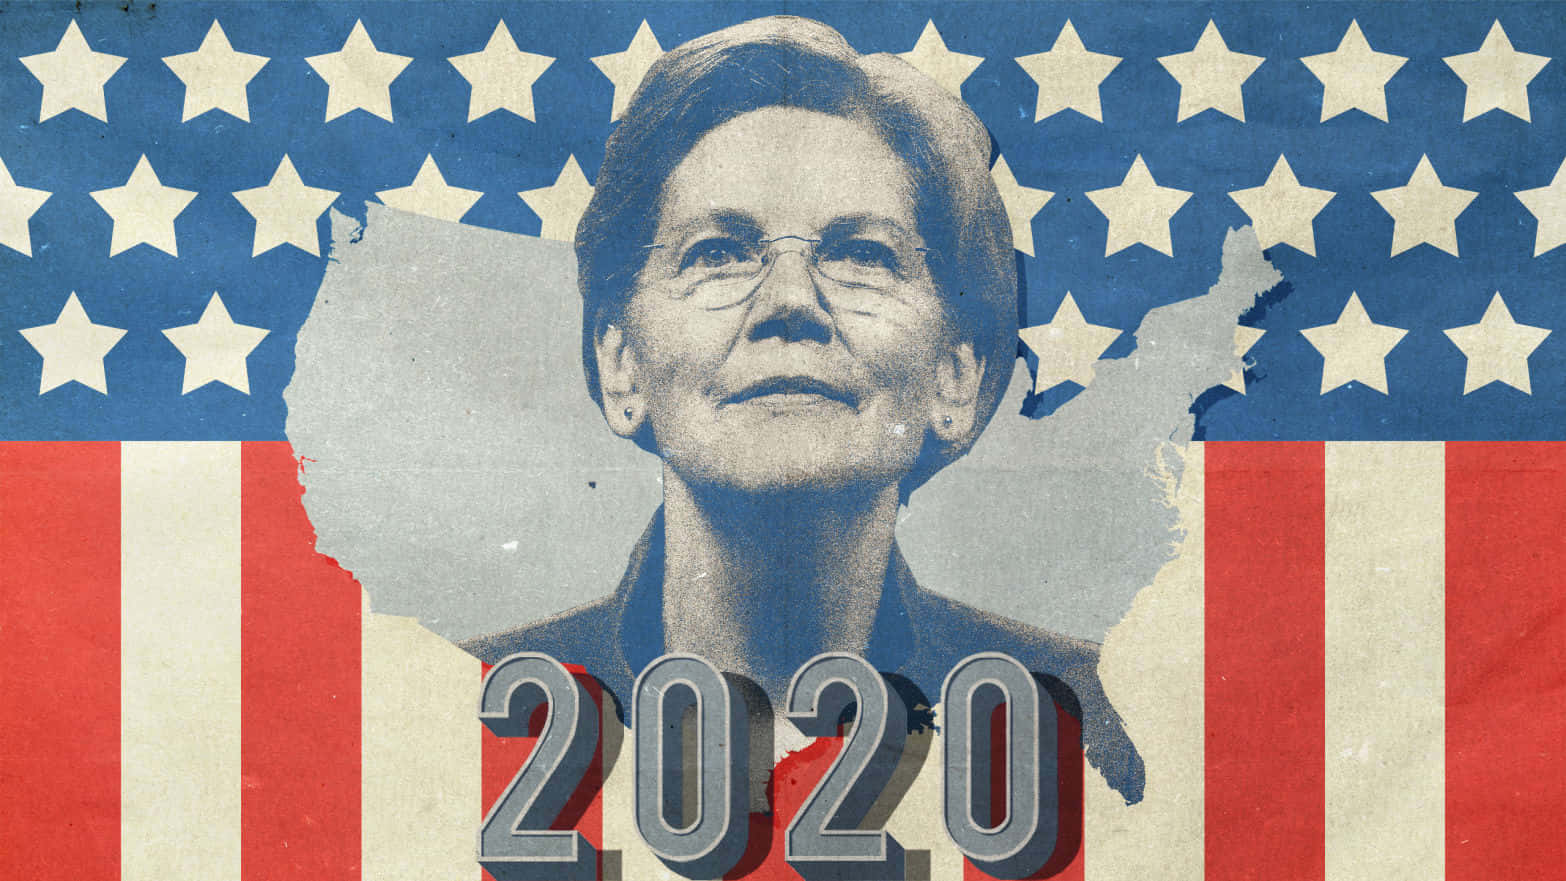 Elizabeth Warren 2020 Election Poster Background